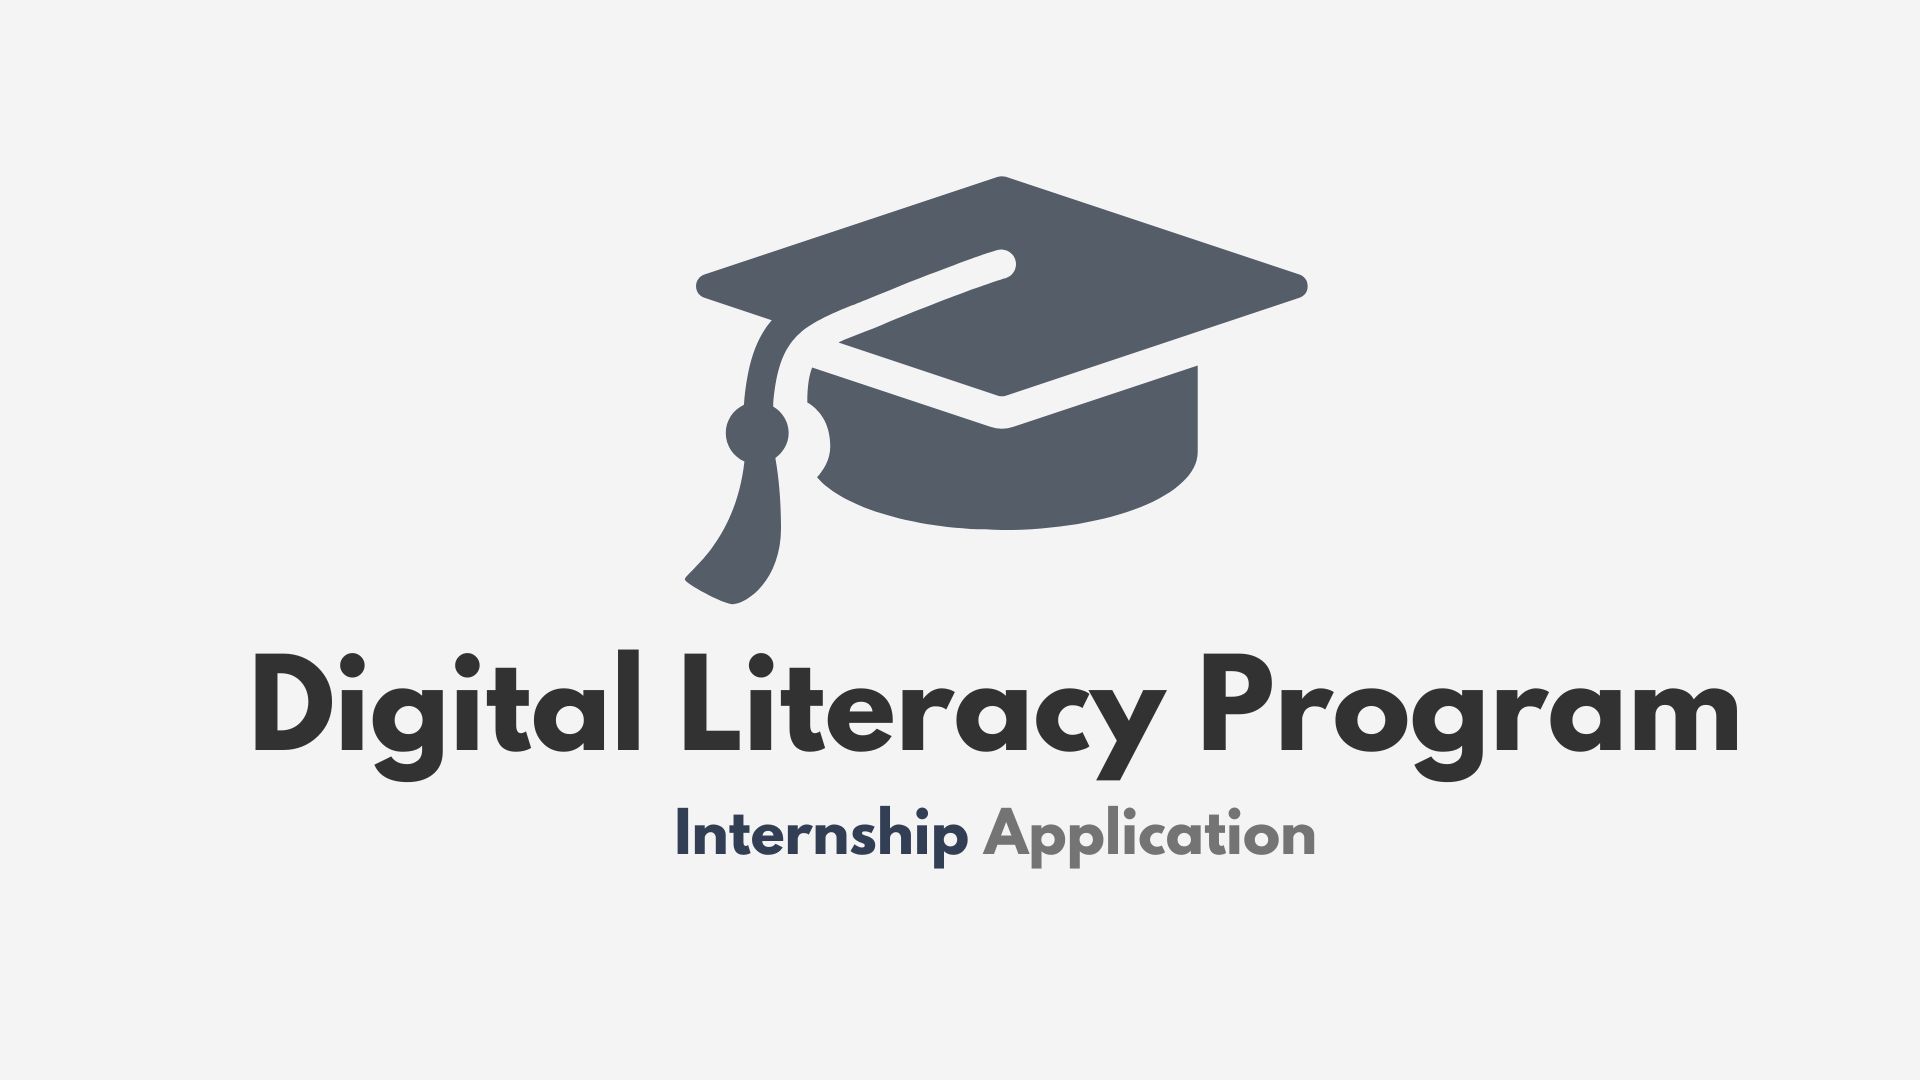 How to apply for Digital Literacy Program internship